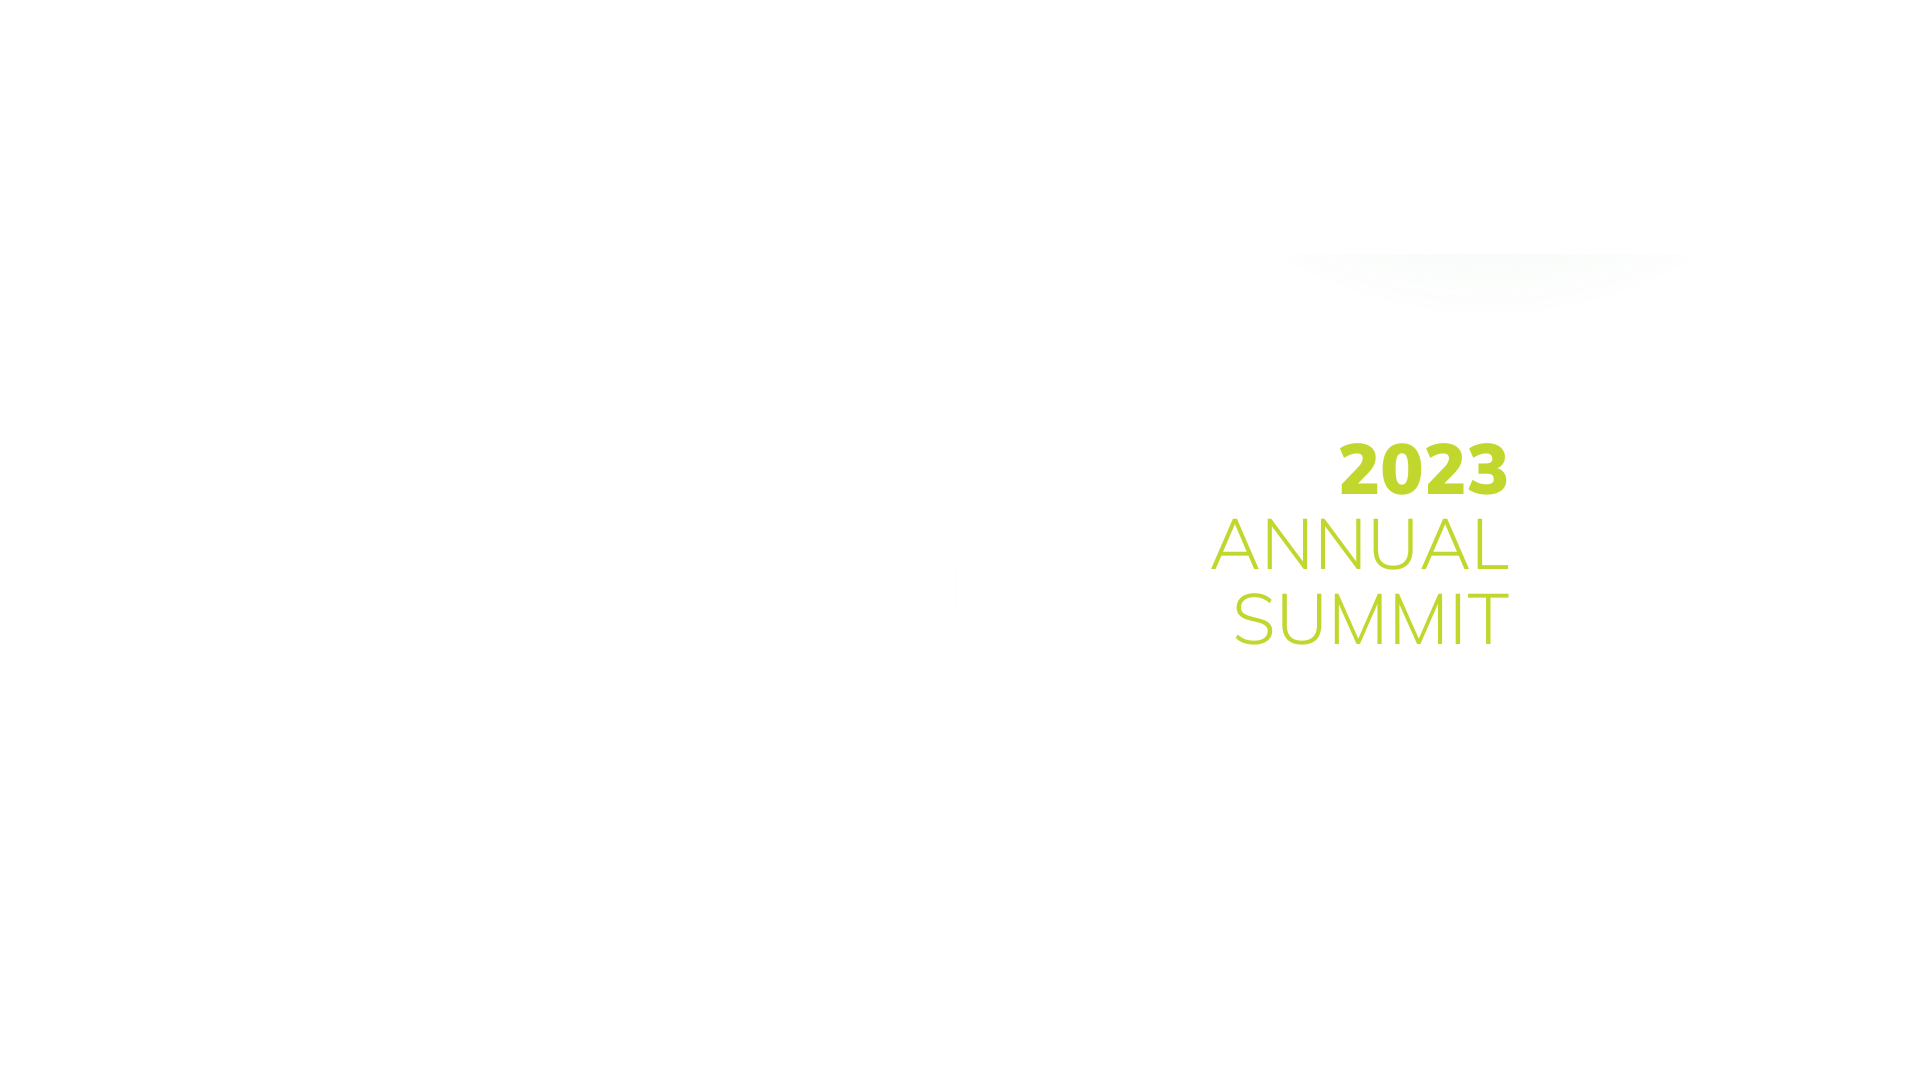 Regional Development Australia Annual Summit 2023